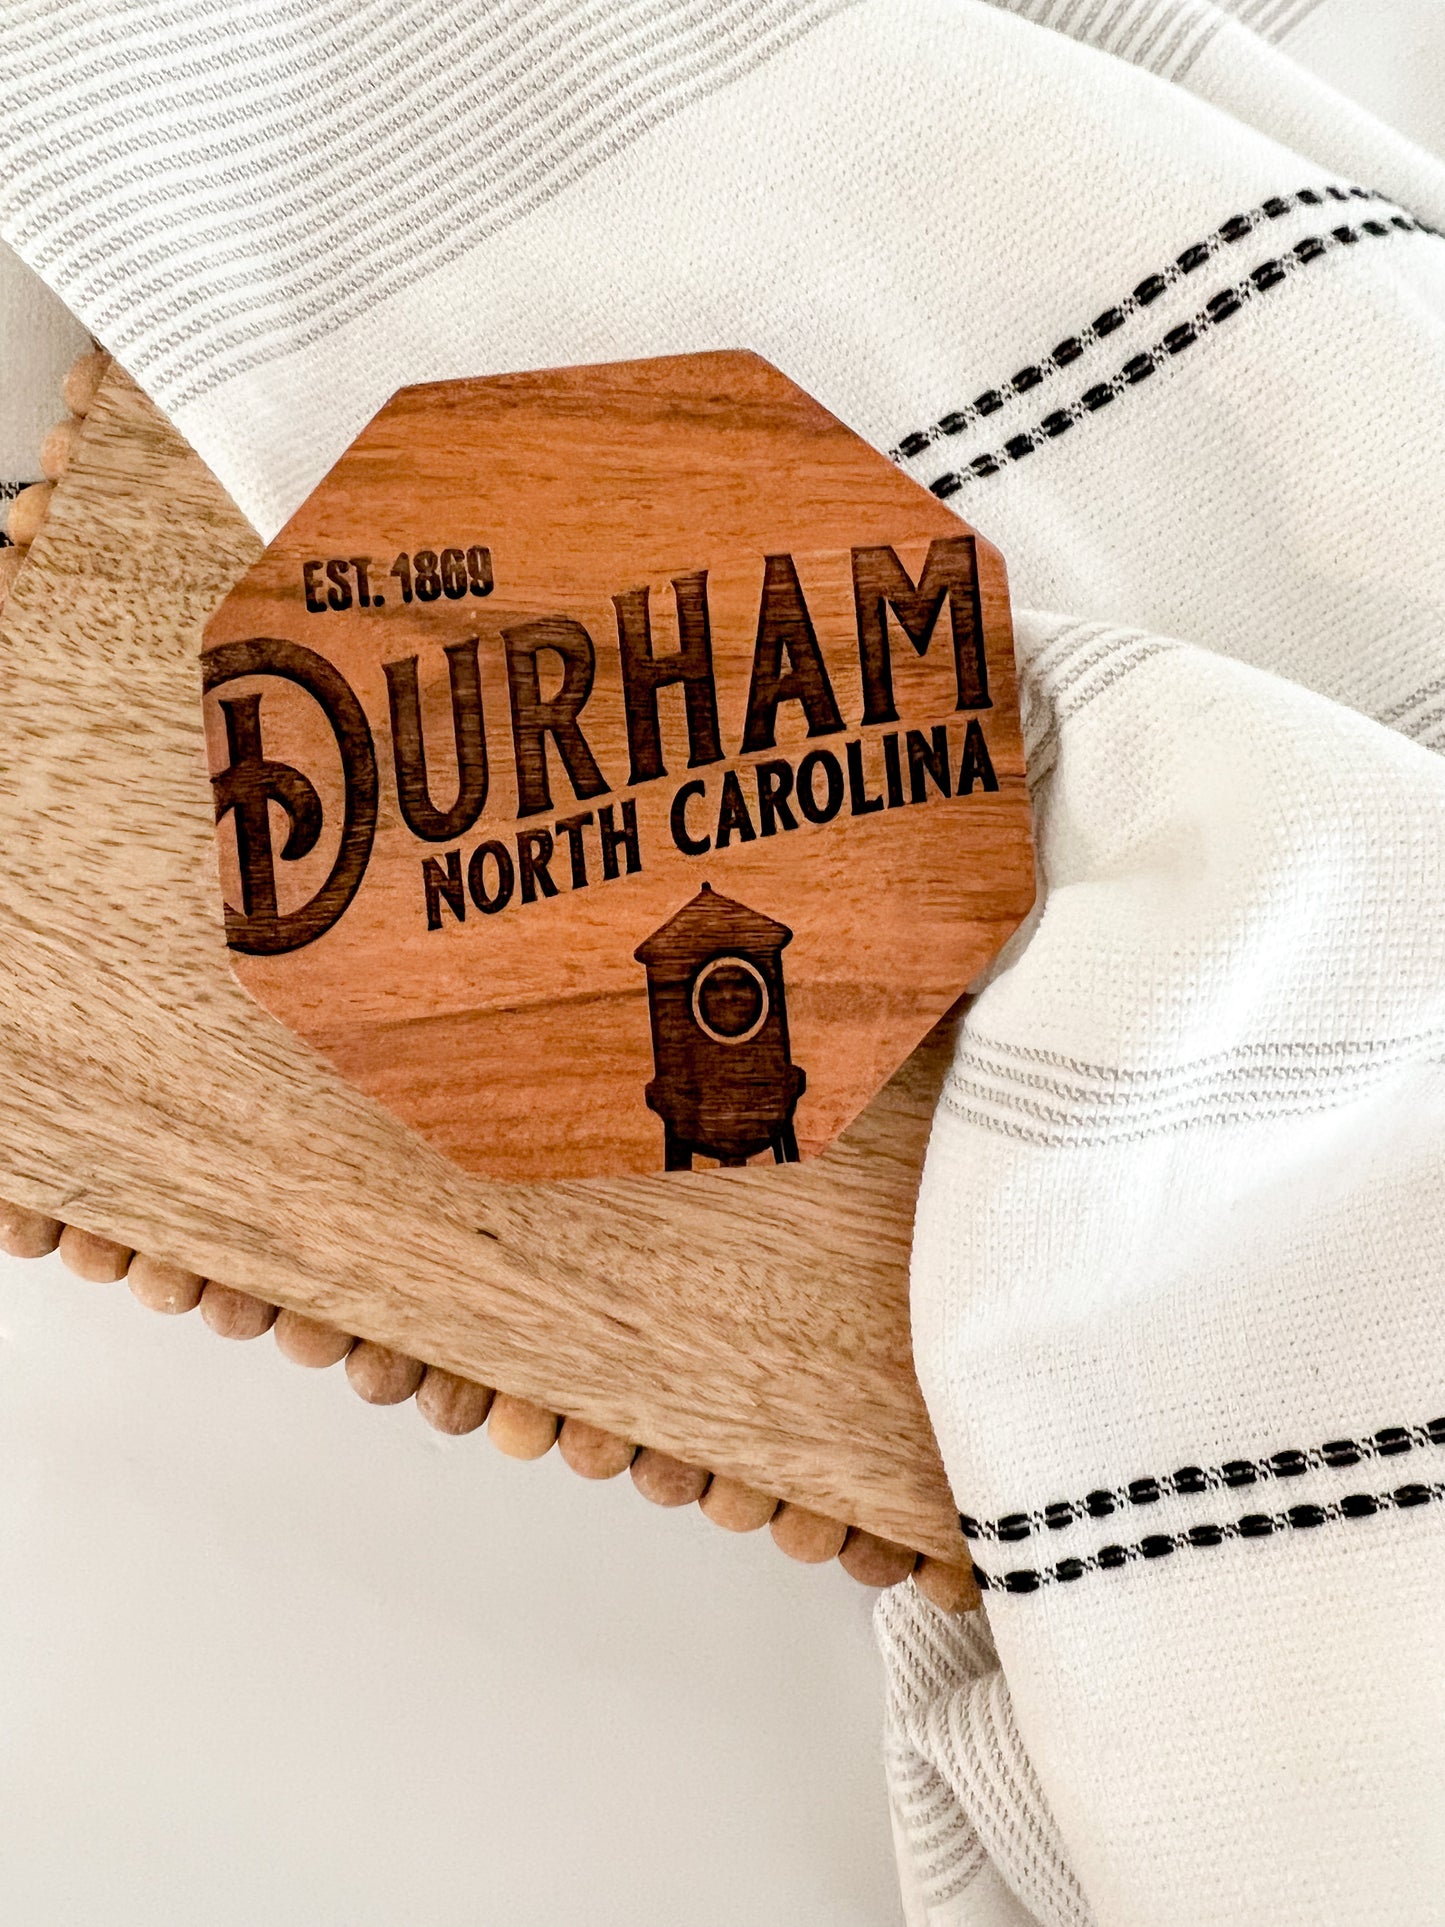 Durham NC Engraved Coaster